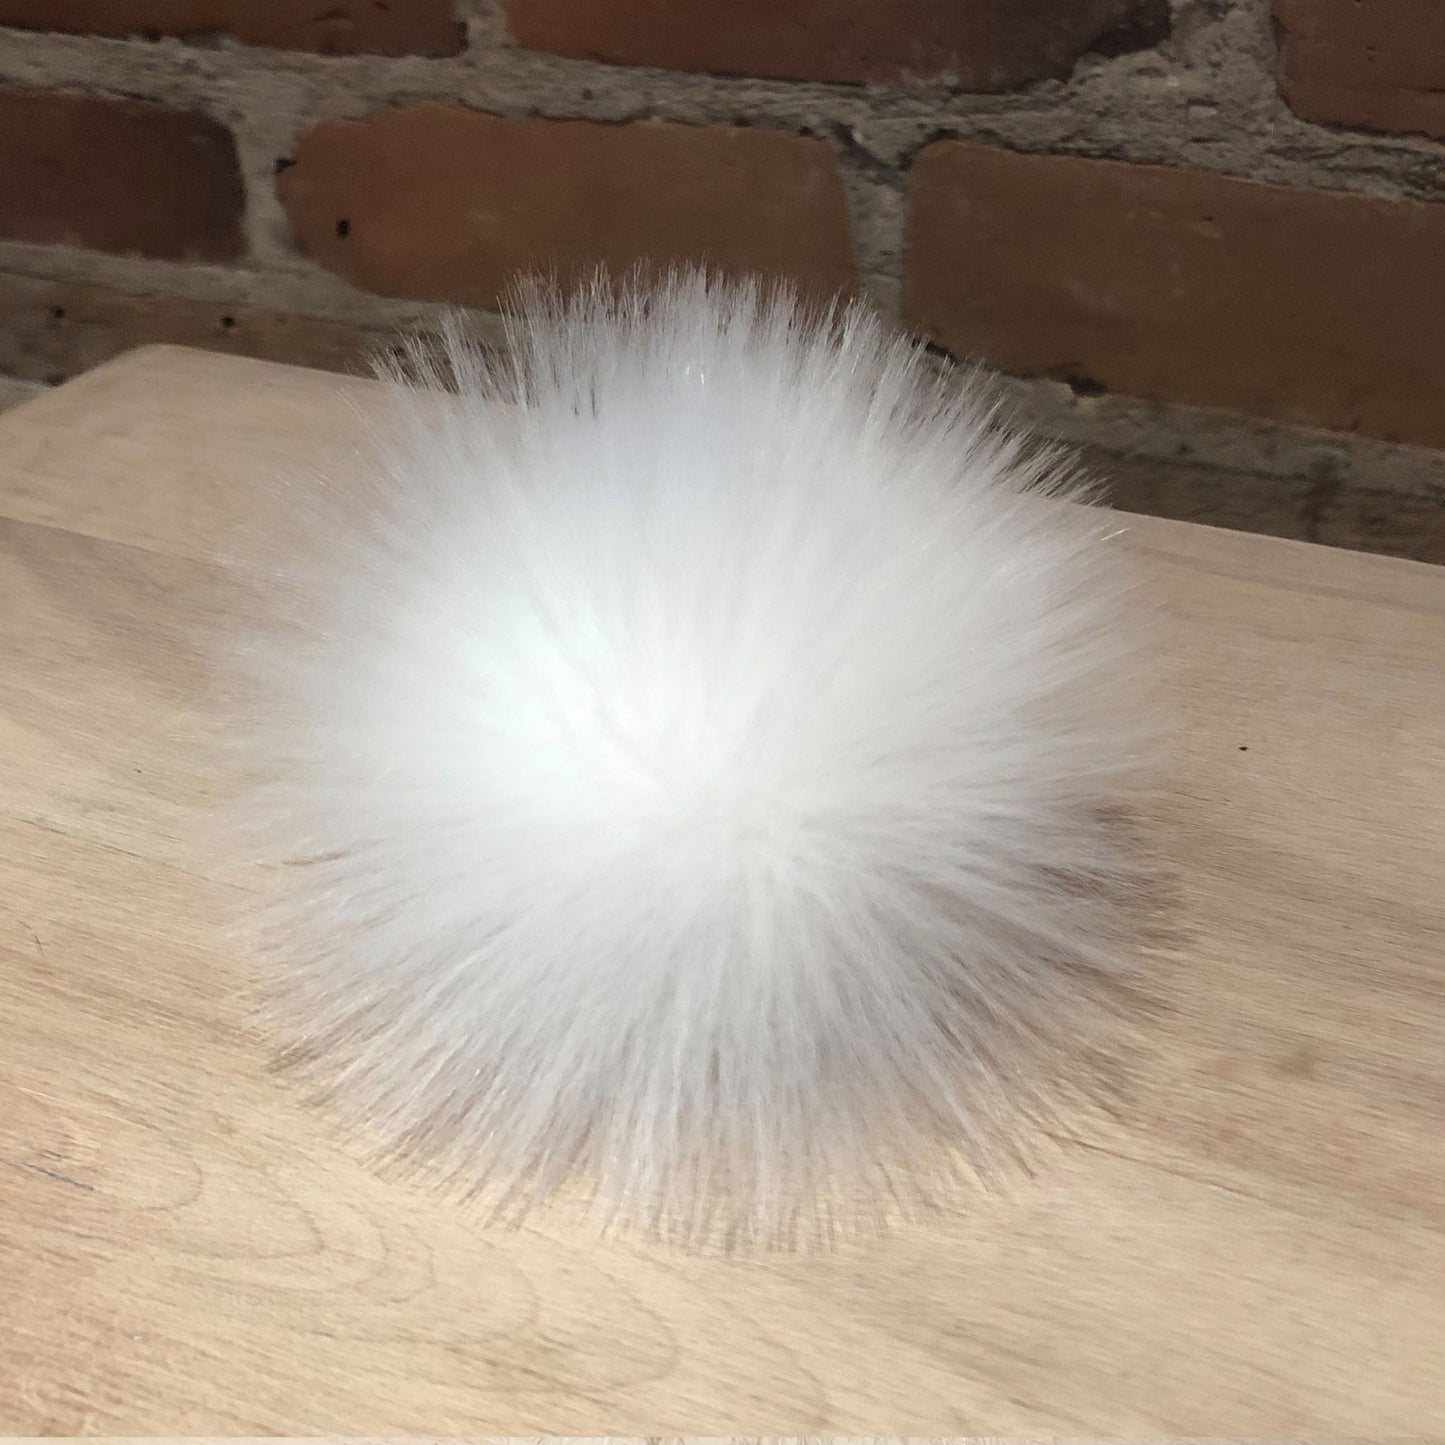 Sugar White Faux Fur Knit Hat Pom, 3.5 Inch